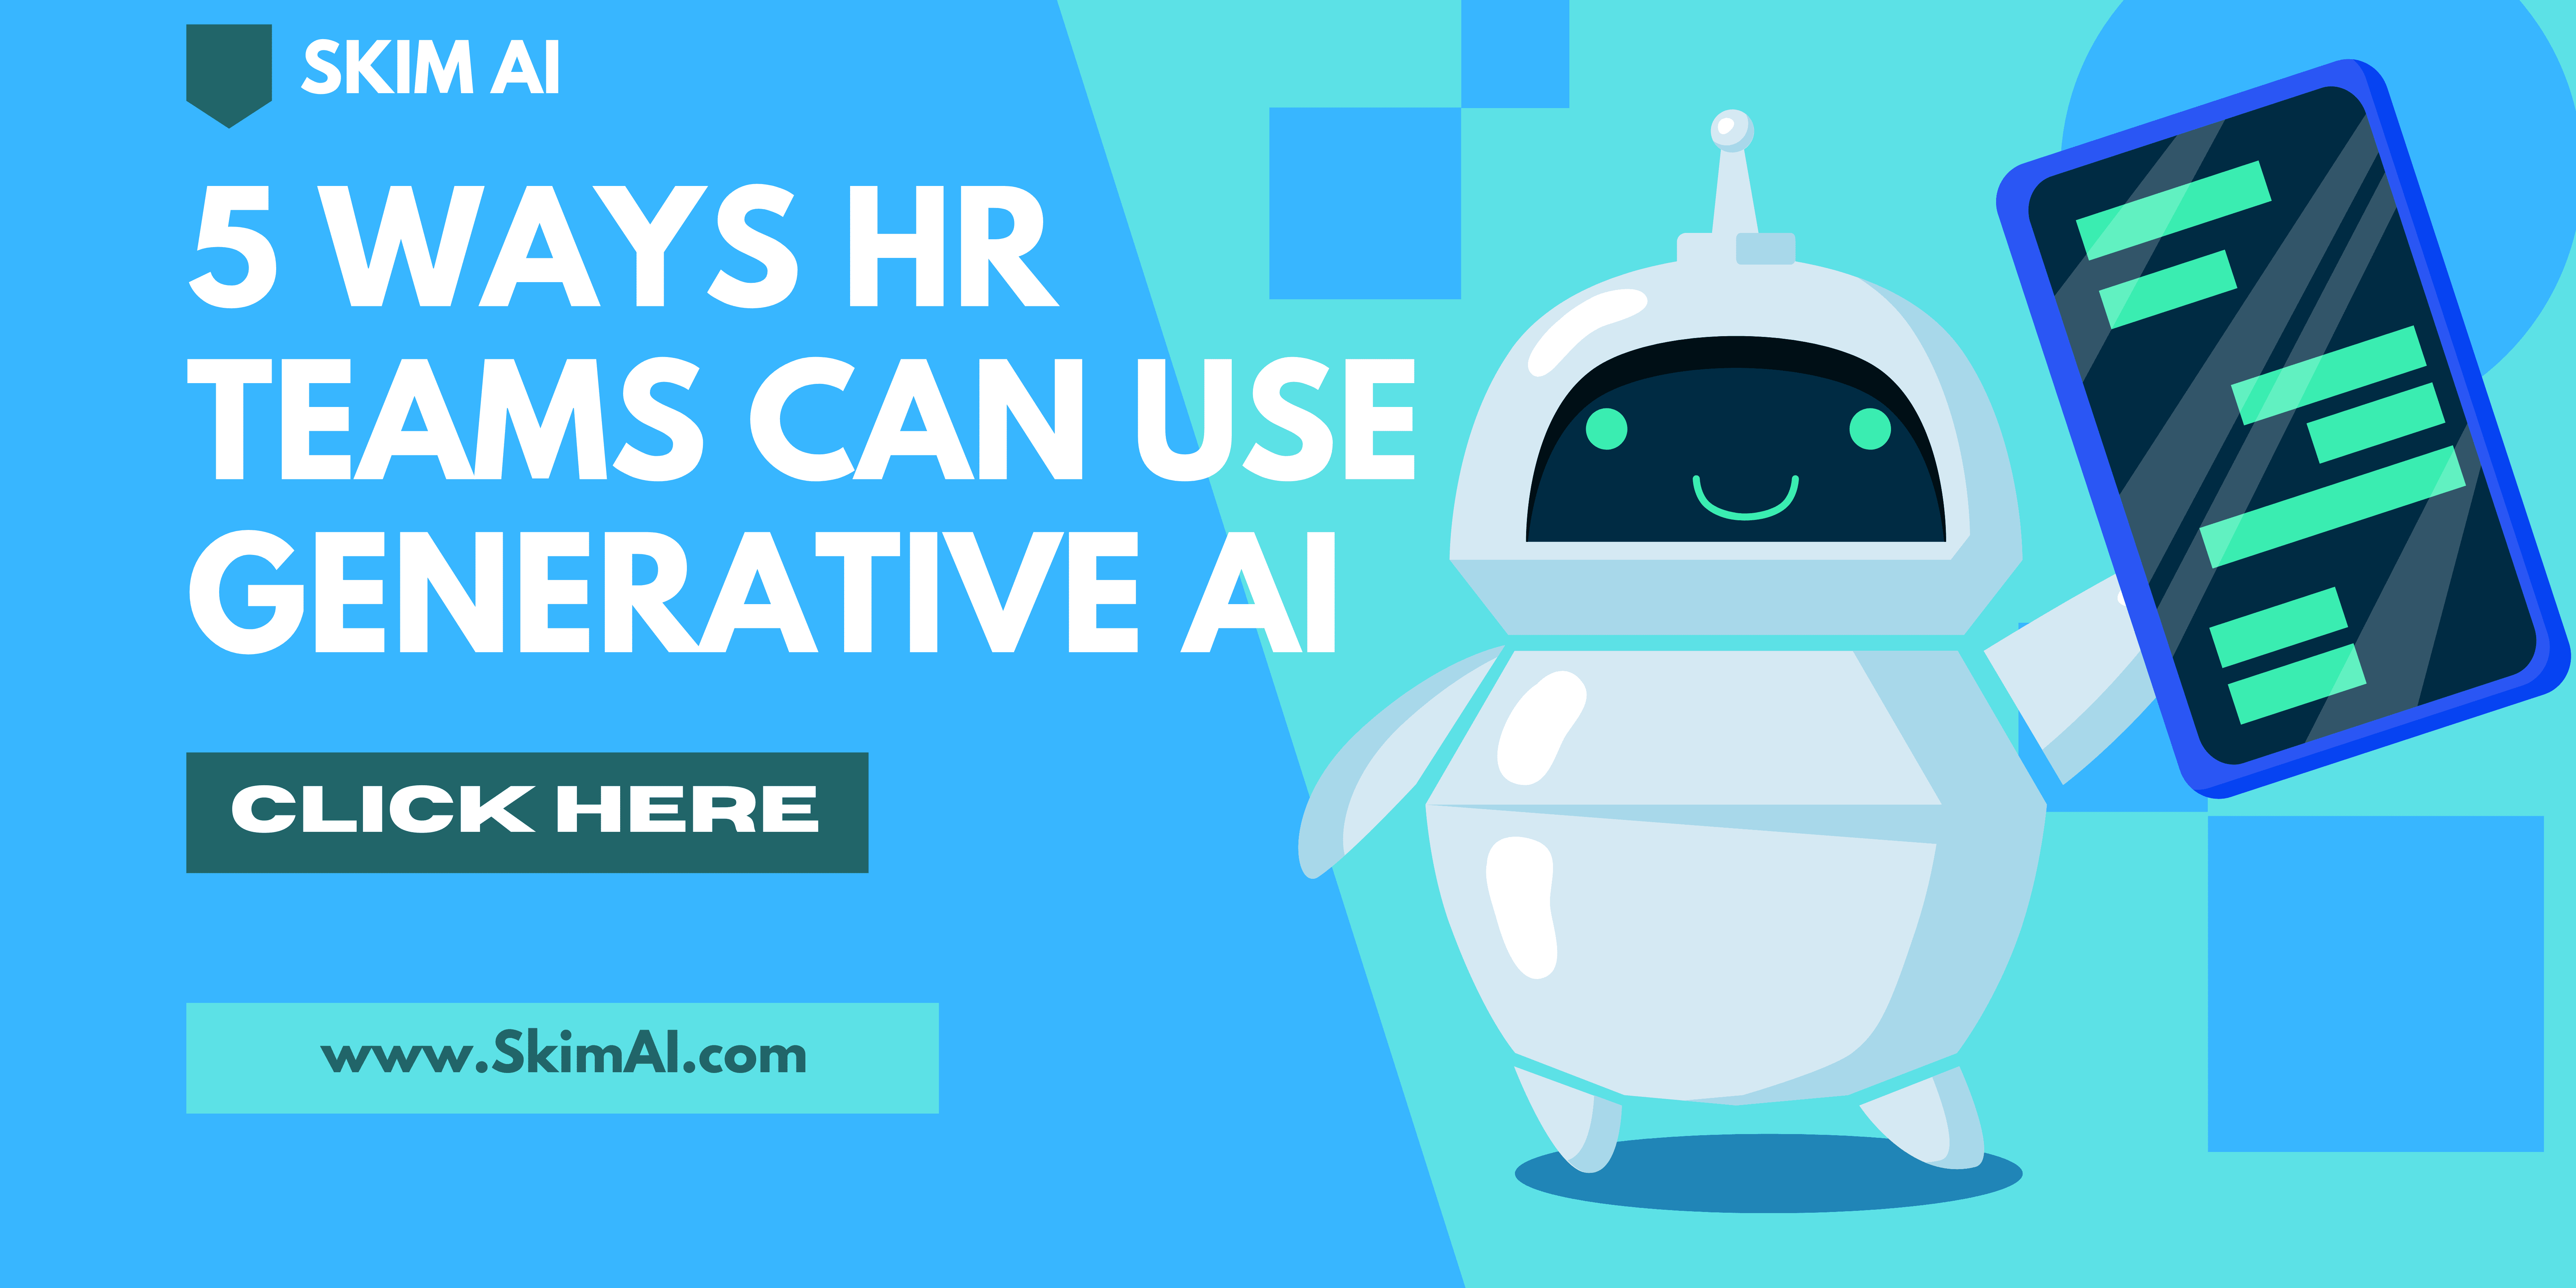 5 Ways HR Teams Can Use Generative AI